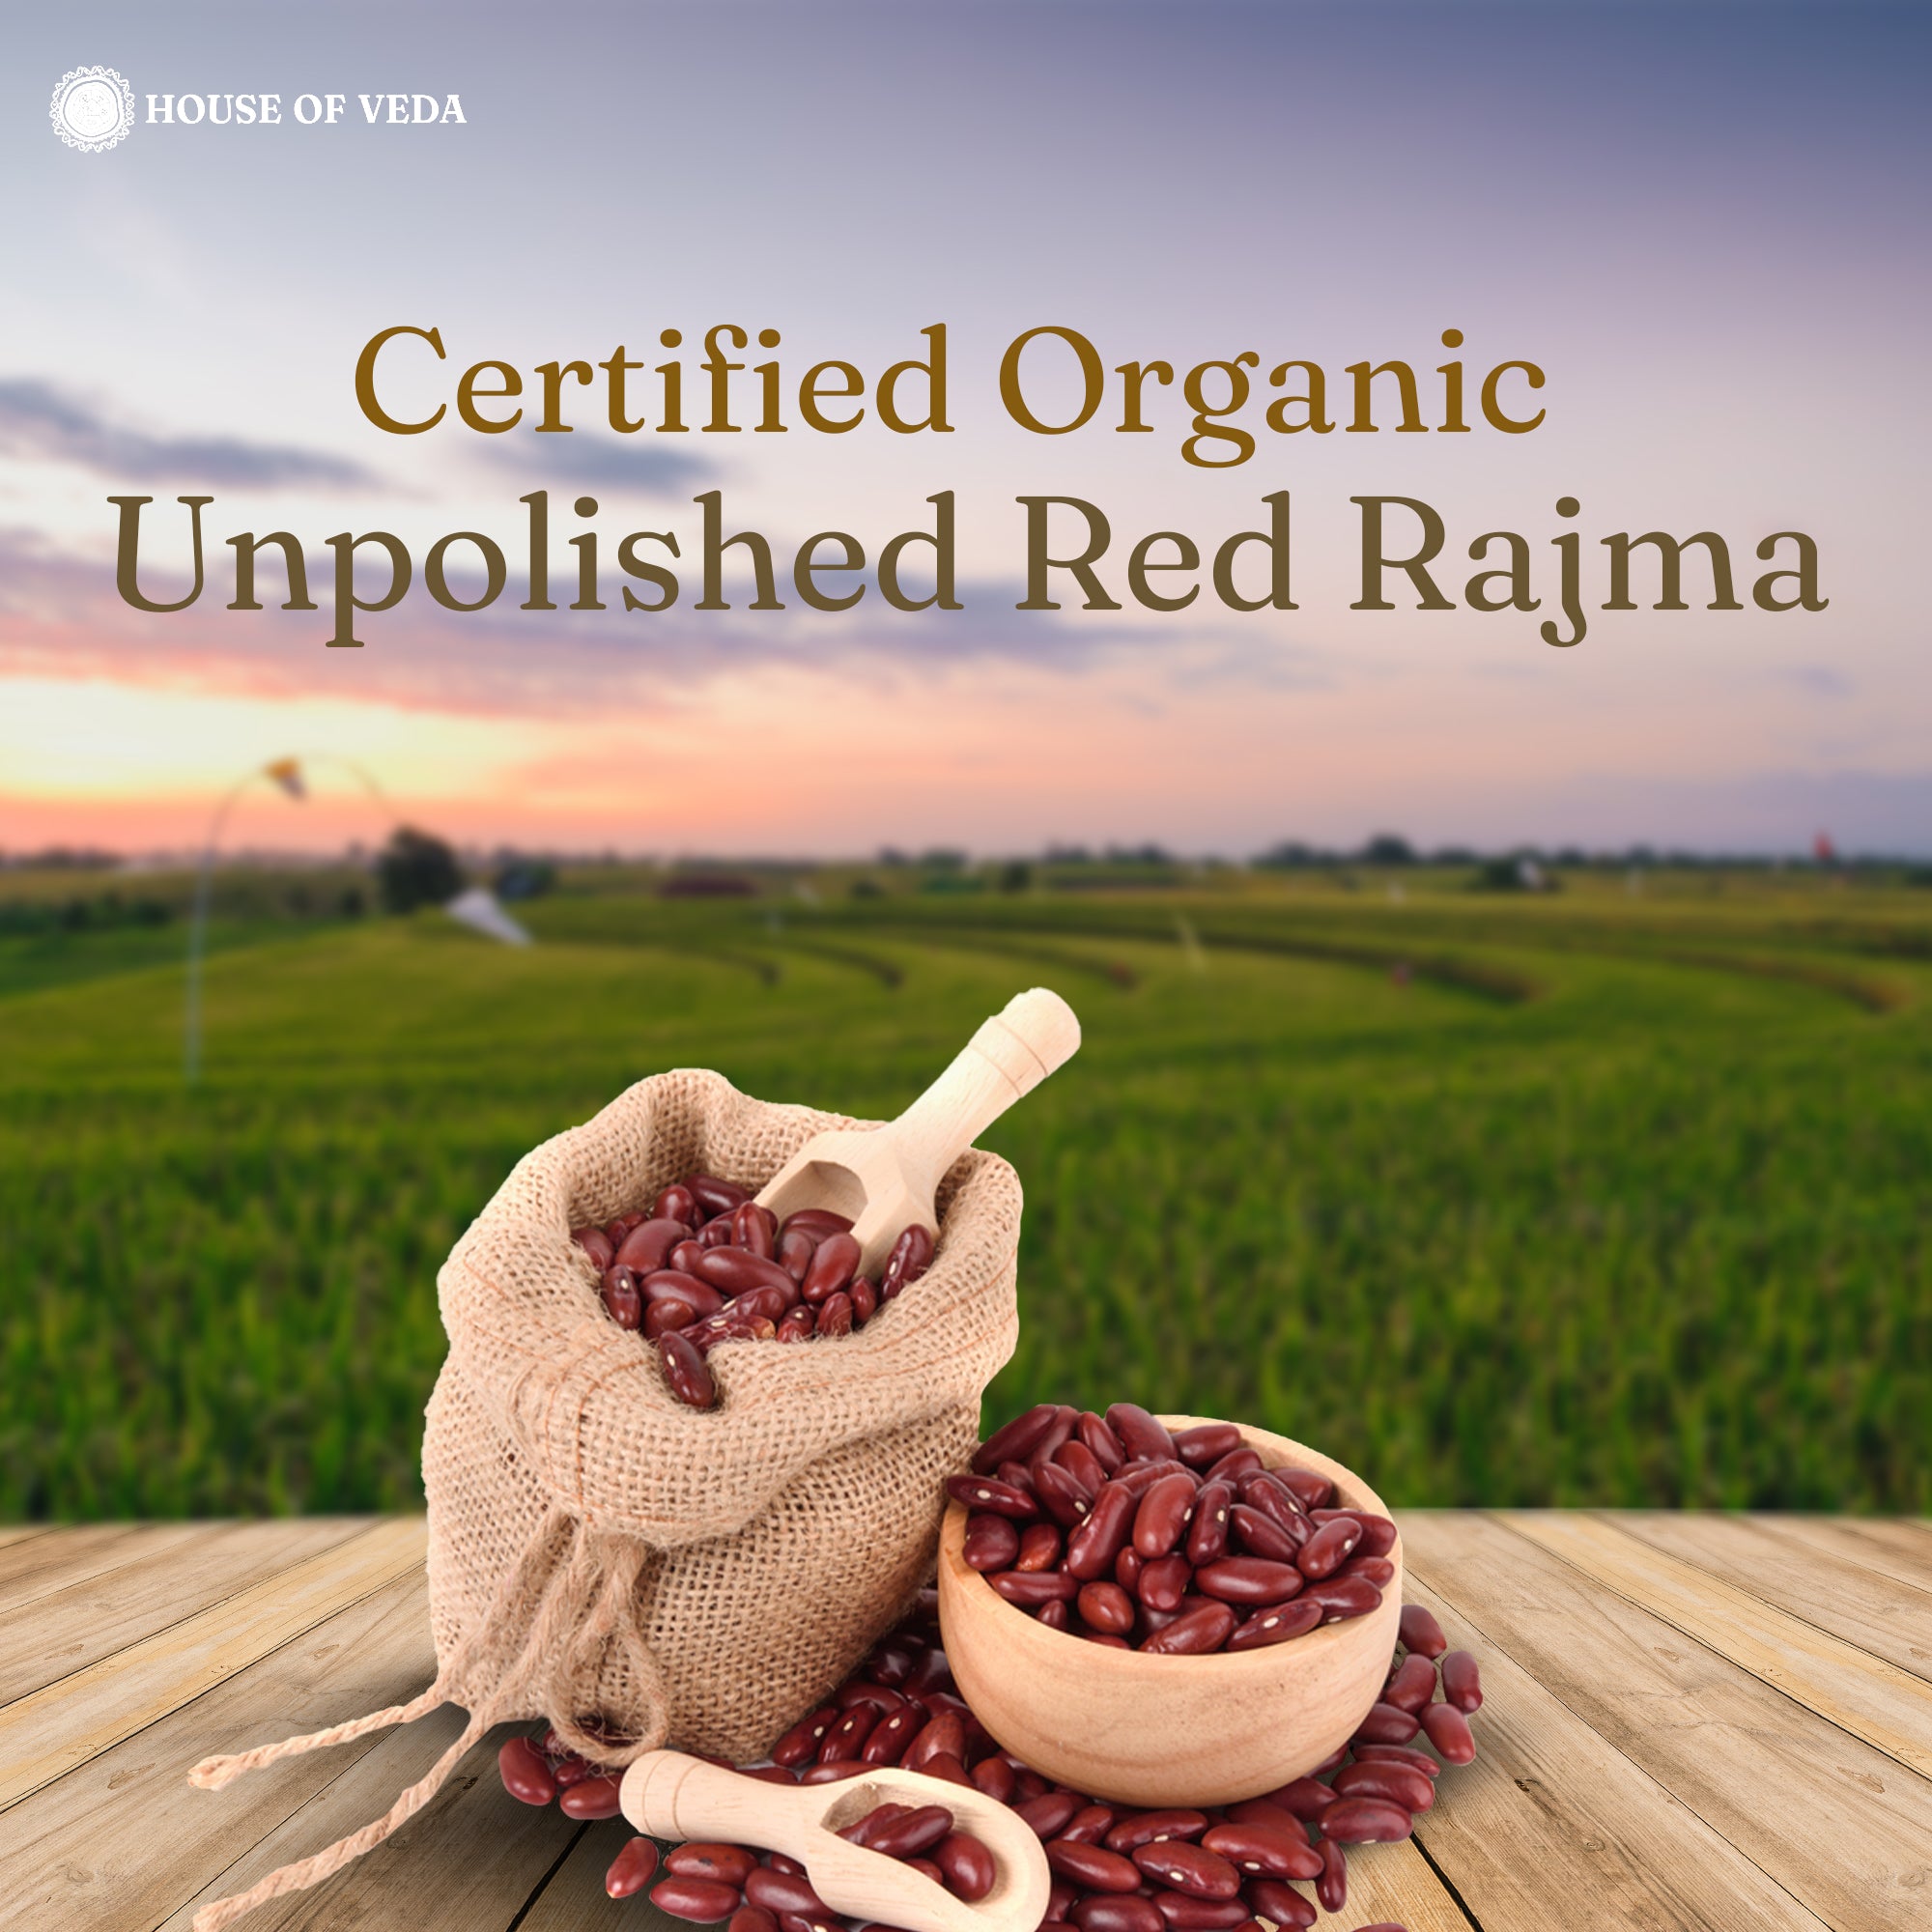 Organic Red Rajma 500g